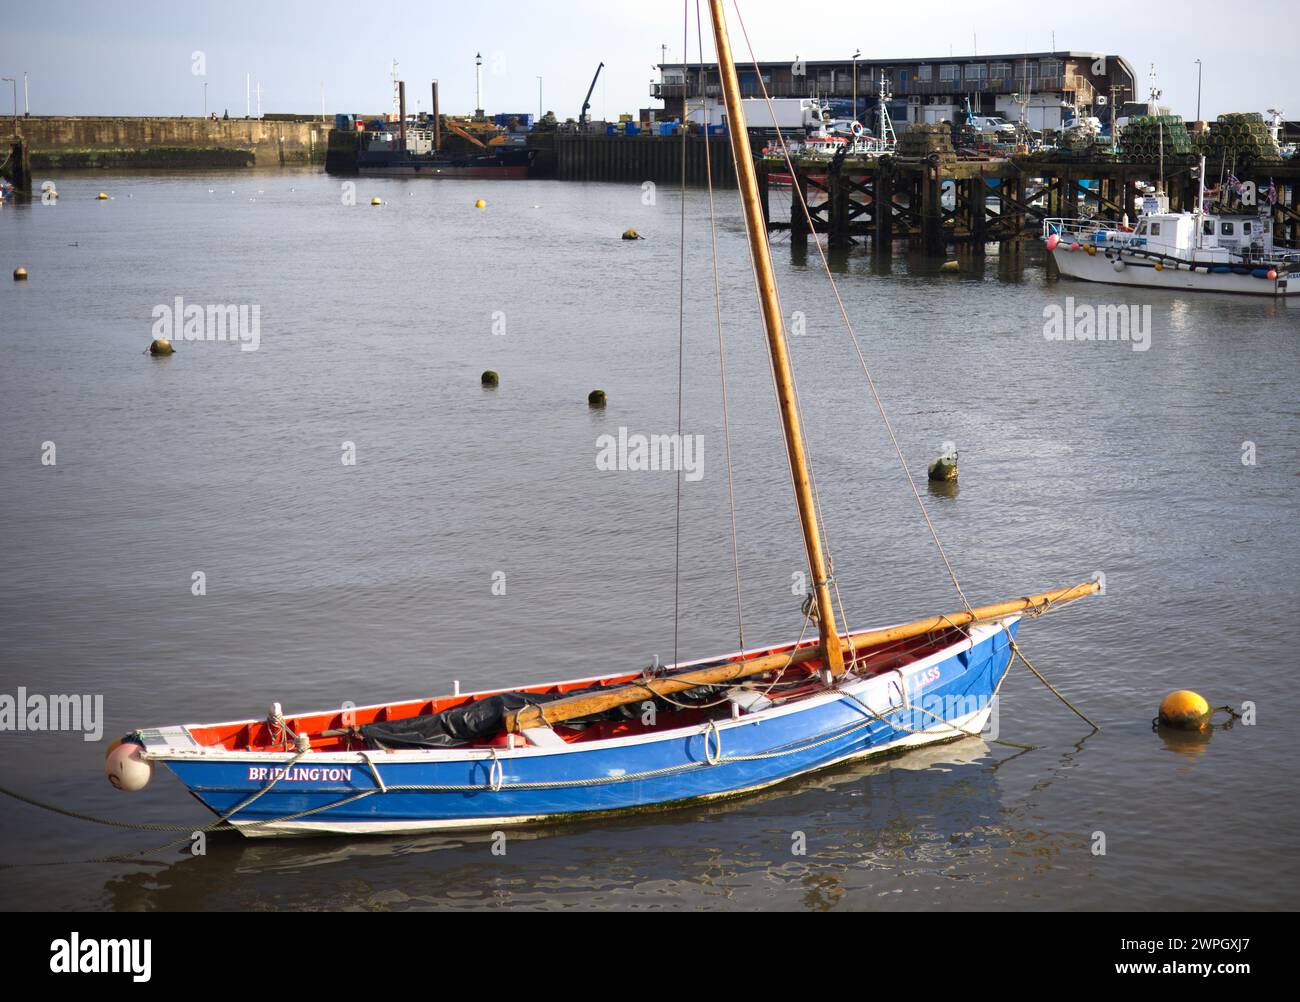 Fishing boat in Bridlington Harbour in Yorkshire Stock Photo